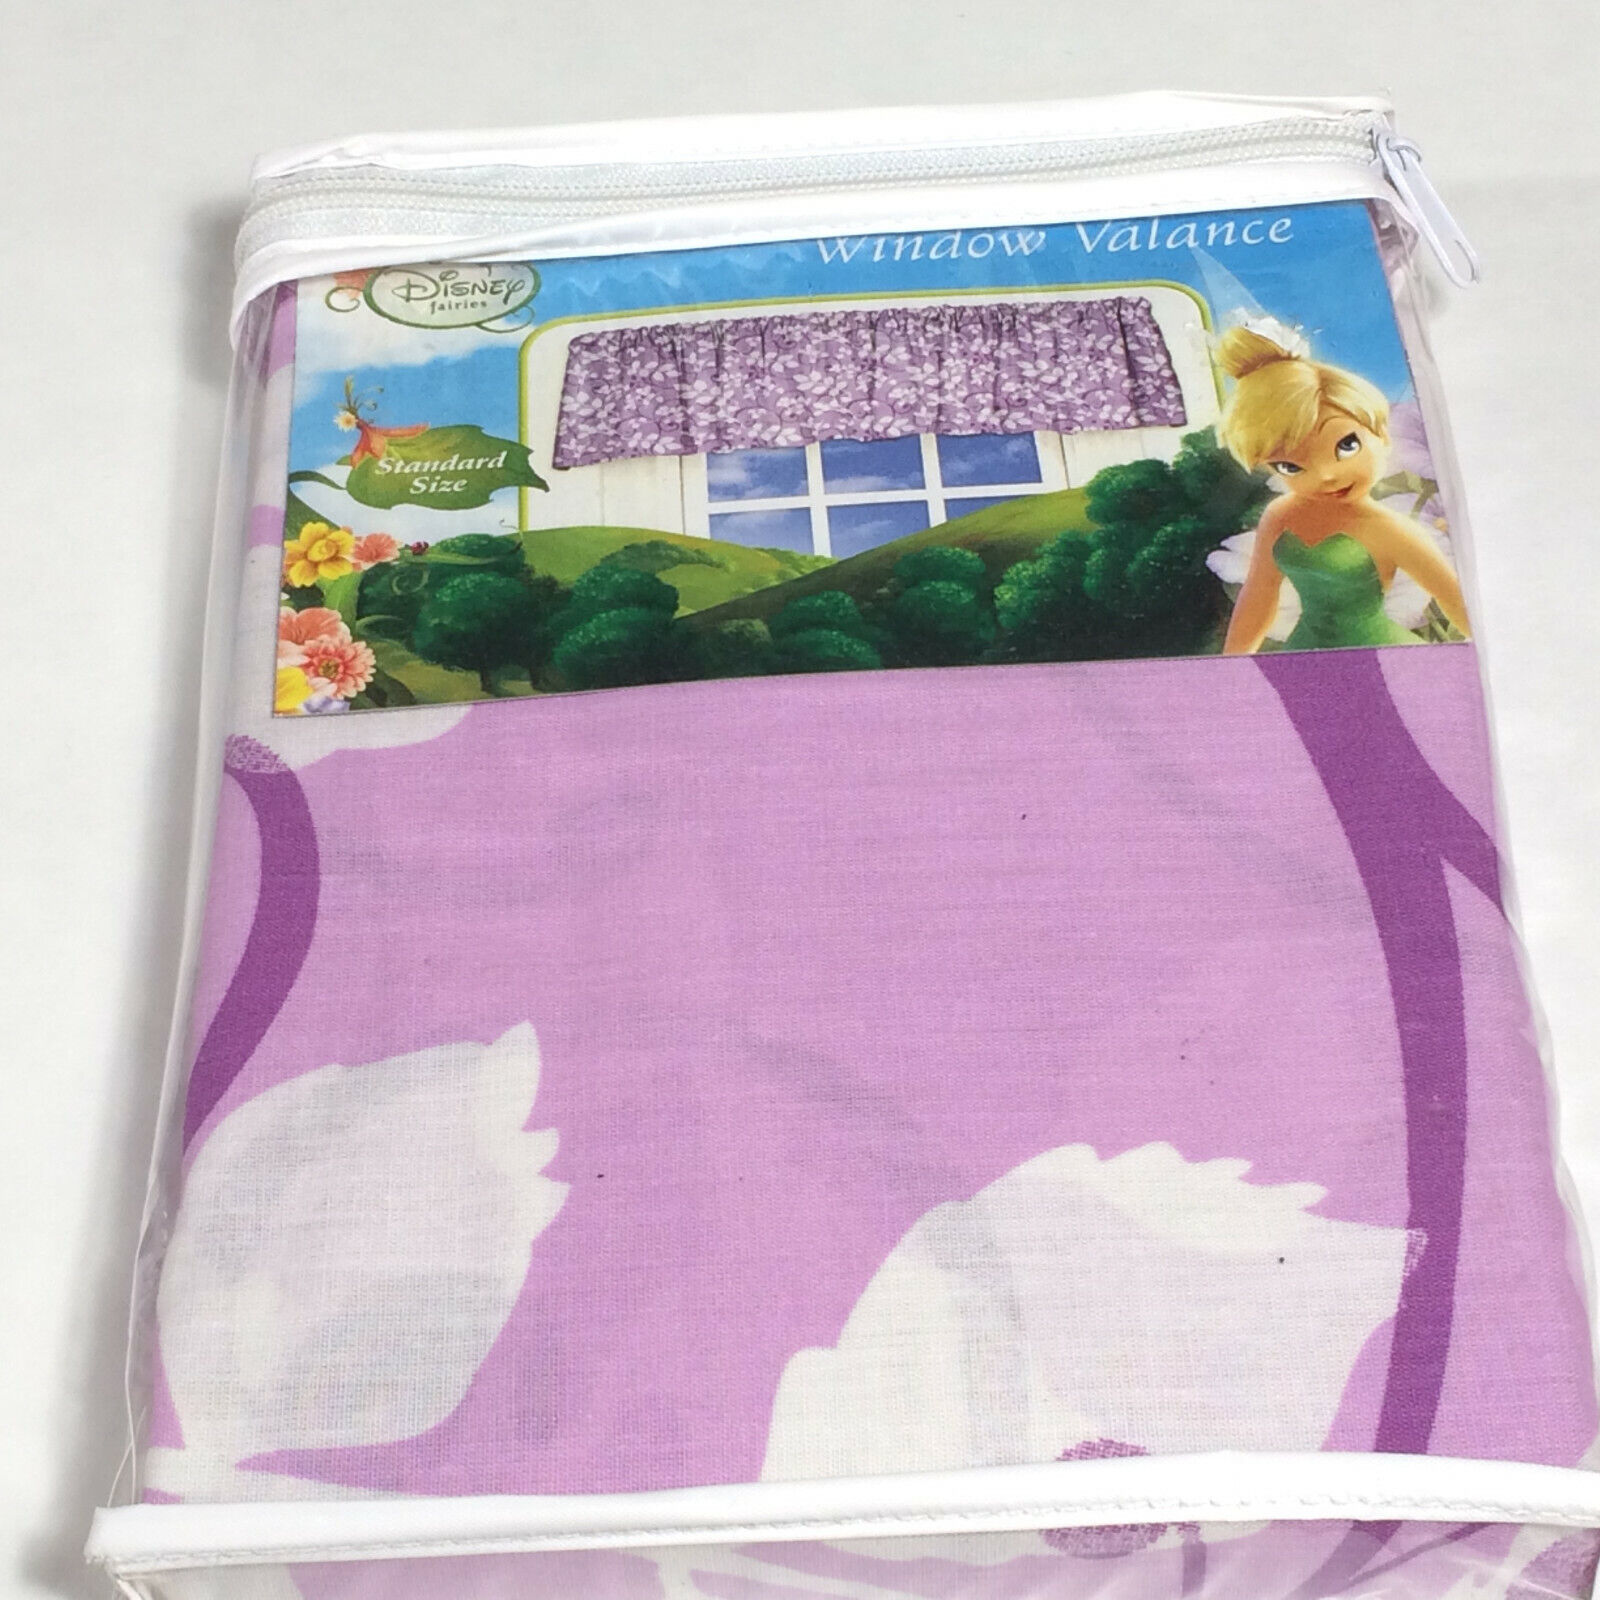 Disney Fairies window valance purple botanical print 84x15 - $14.99